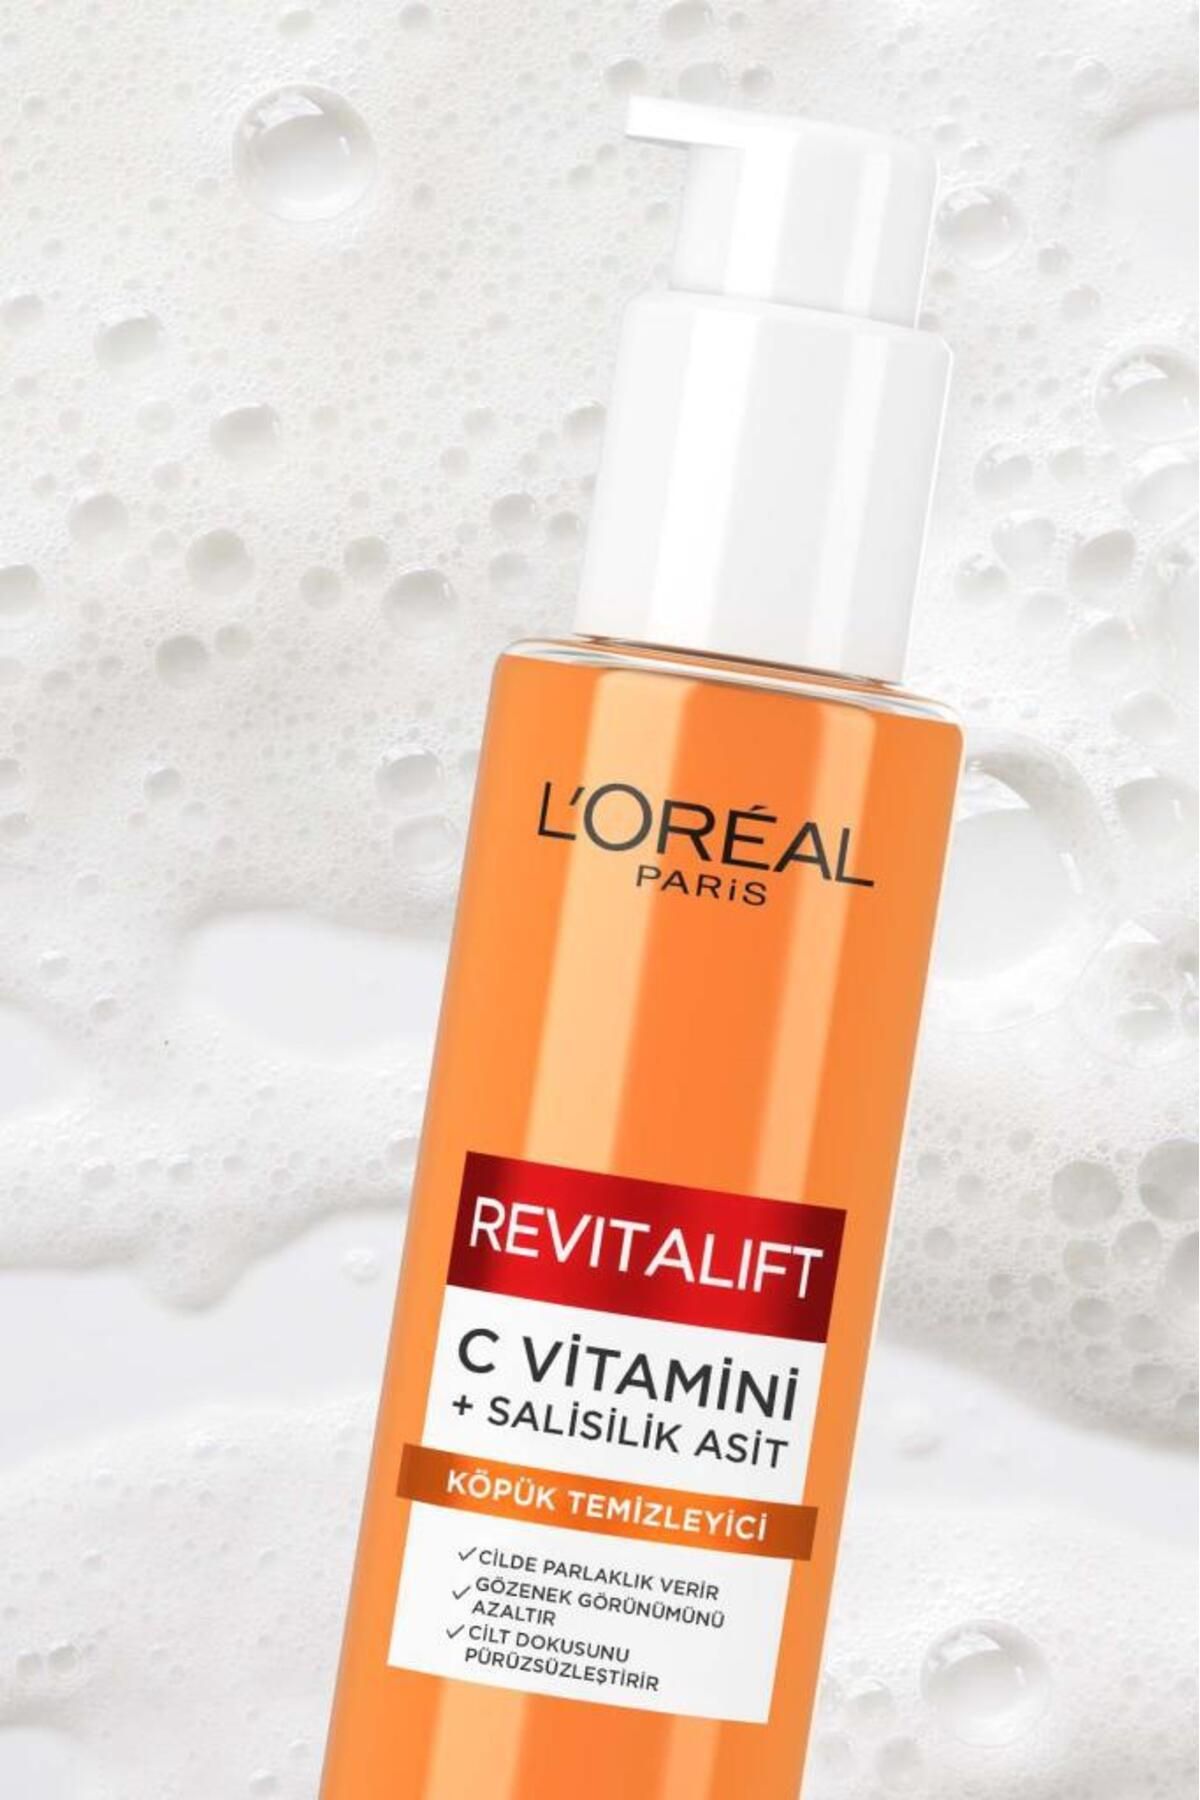 L'Oreal Paris پاک کننده و روشن کننده پوست Revitalift Clinical حاوی ویتامین C + اسید سالیسیلیک